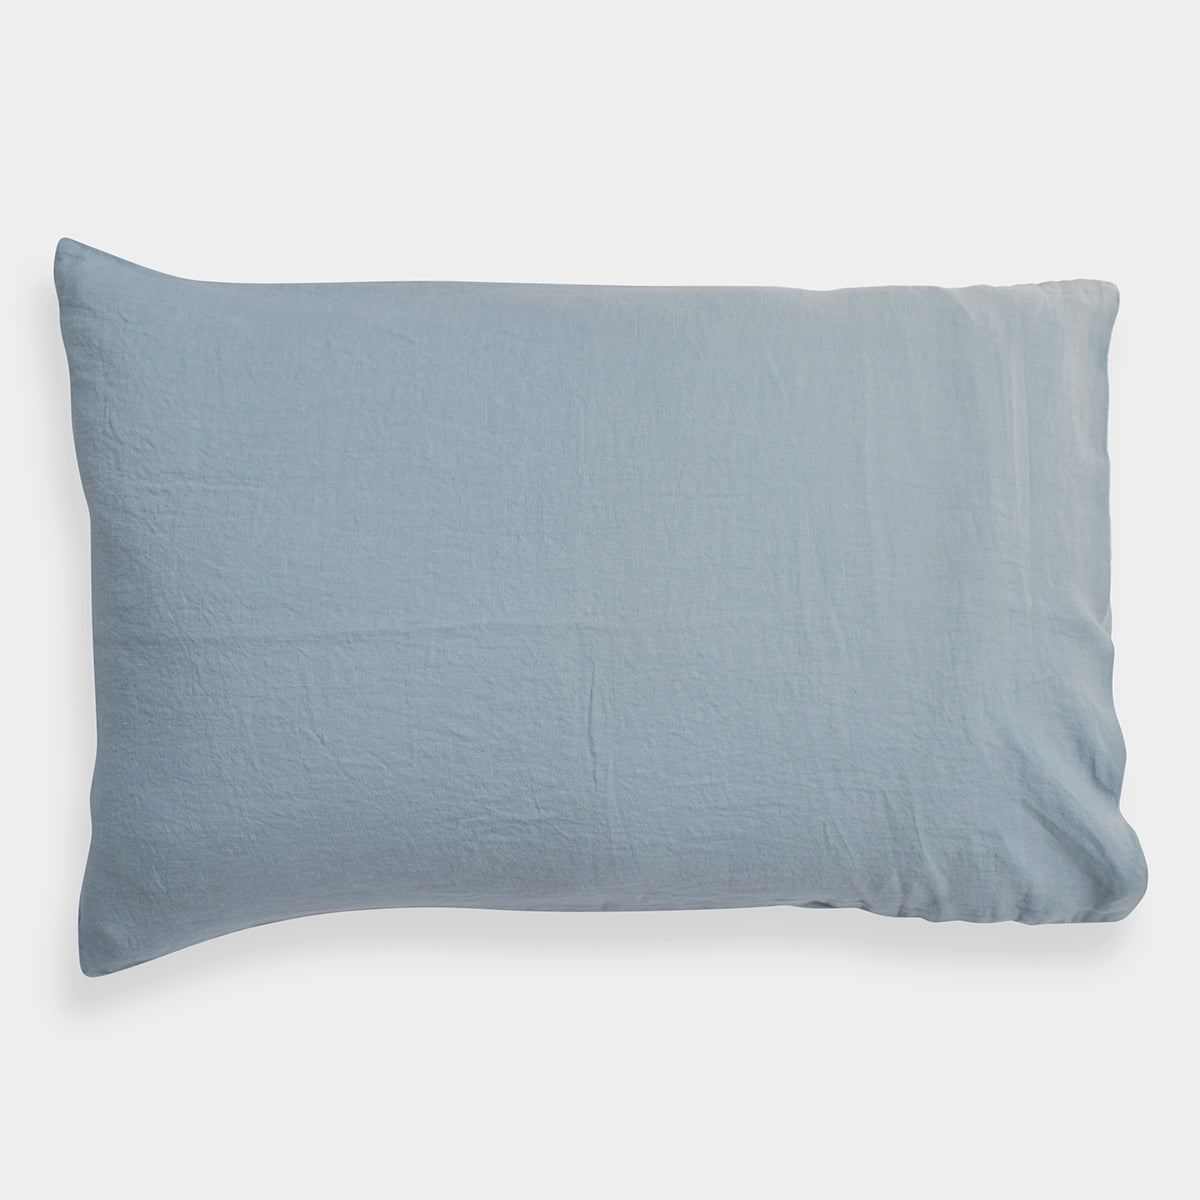 Linge Particulier Scandinavian Blue Standard Linen Pillowcase Sham for a colorful linen bedding look in grey blue - Collyer's Mansion